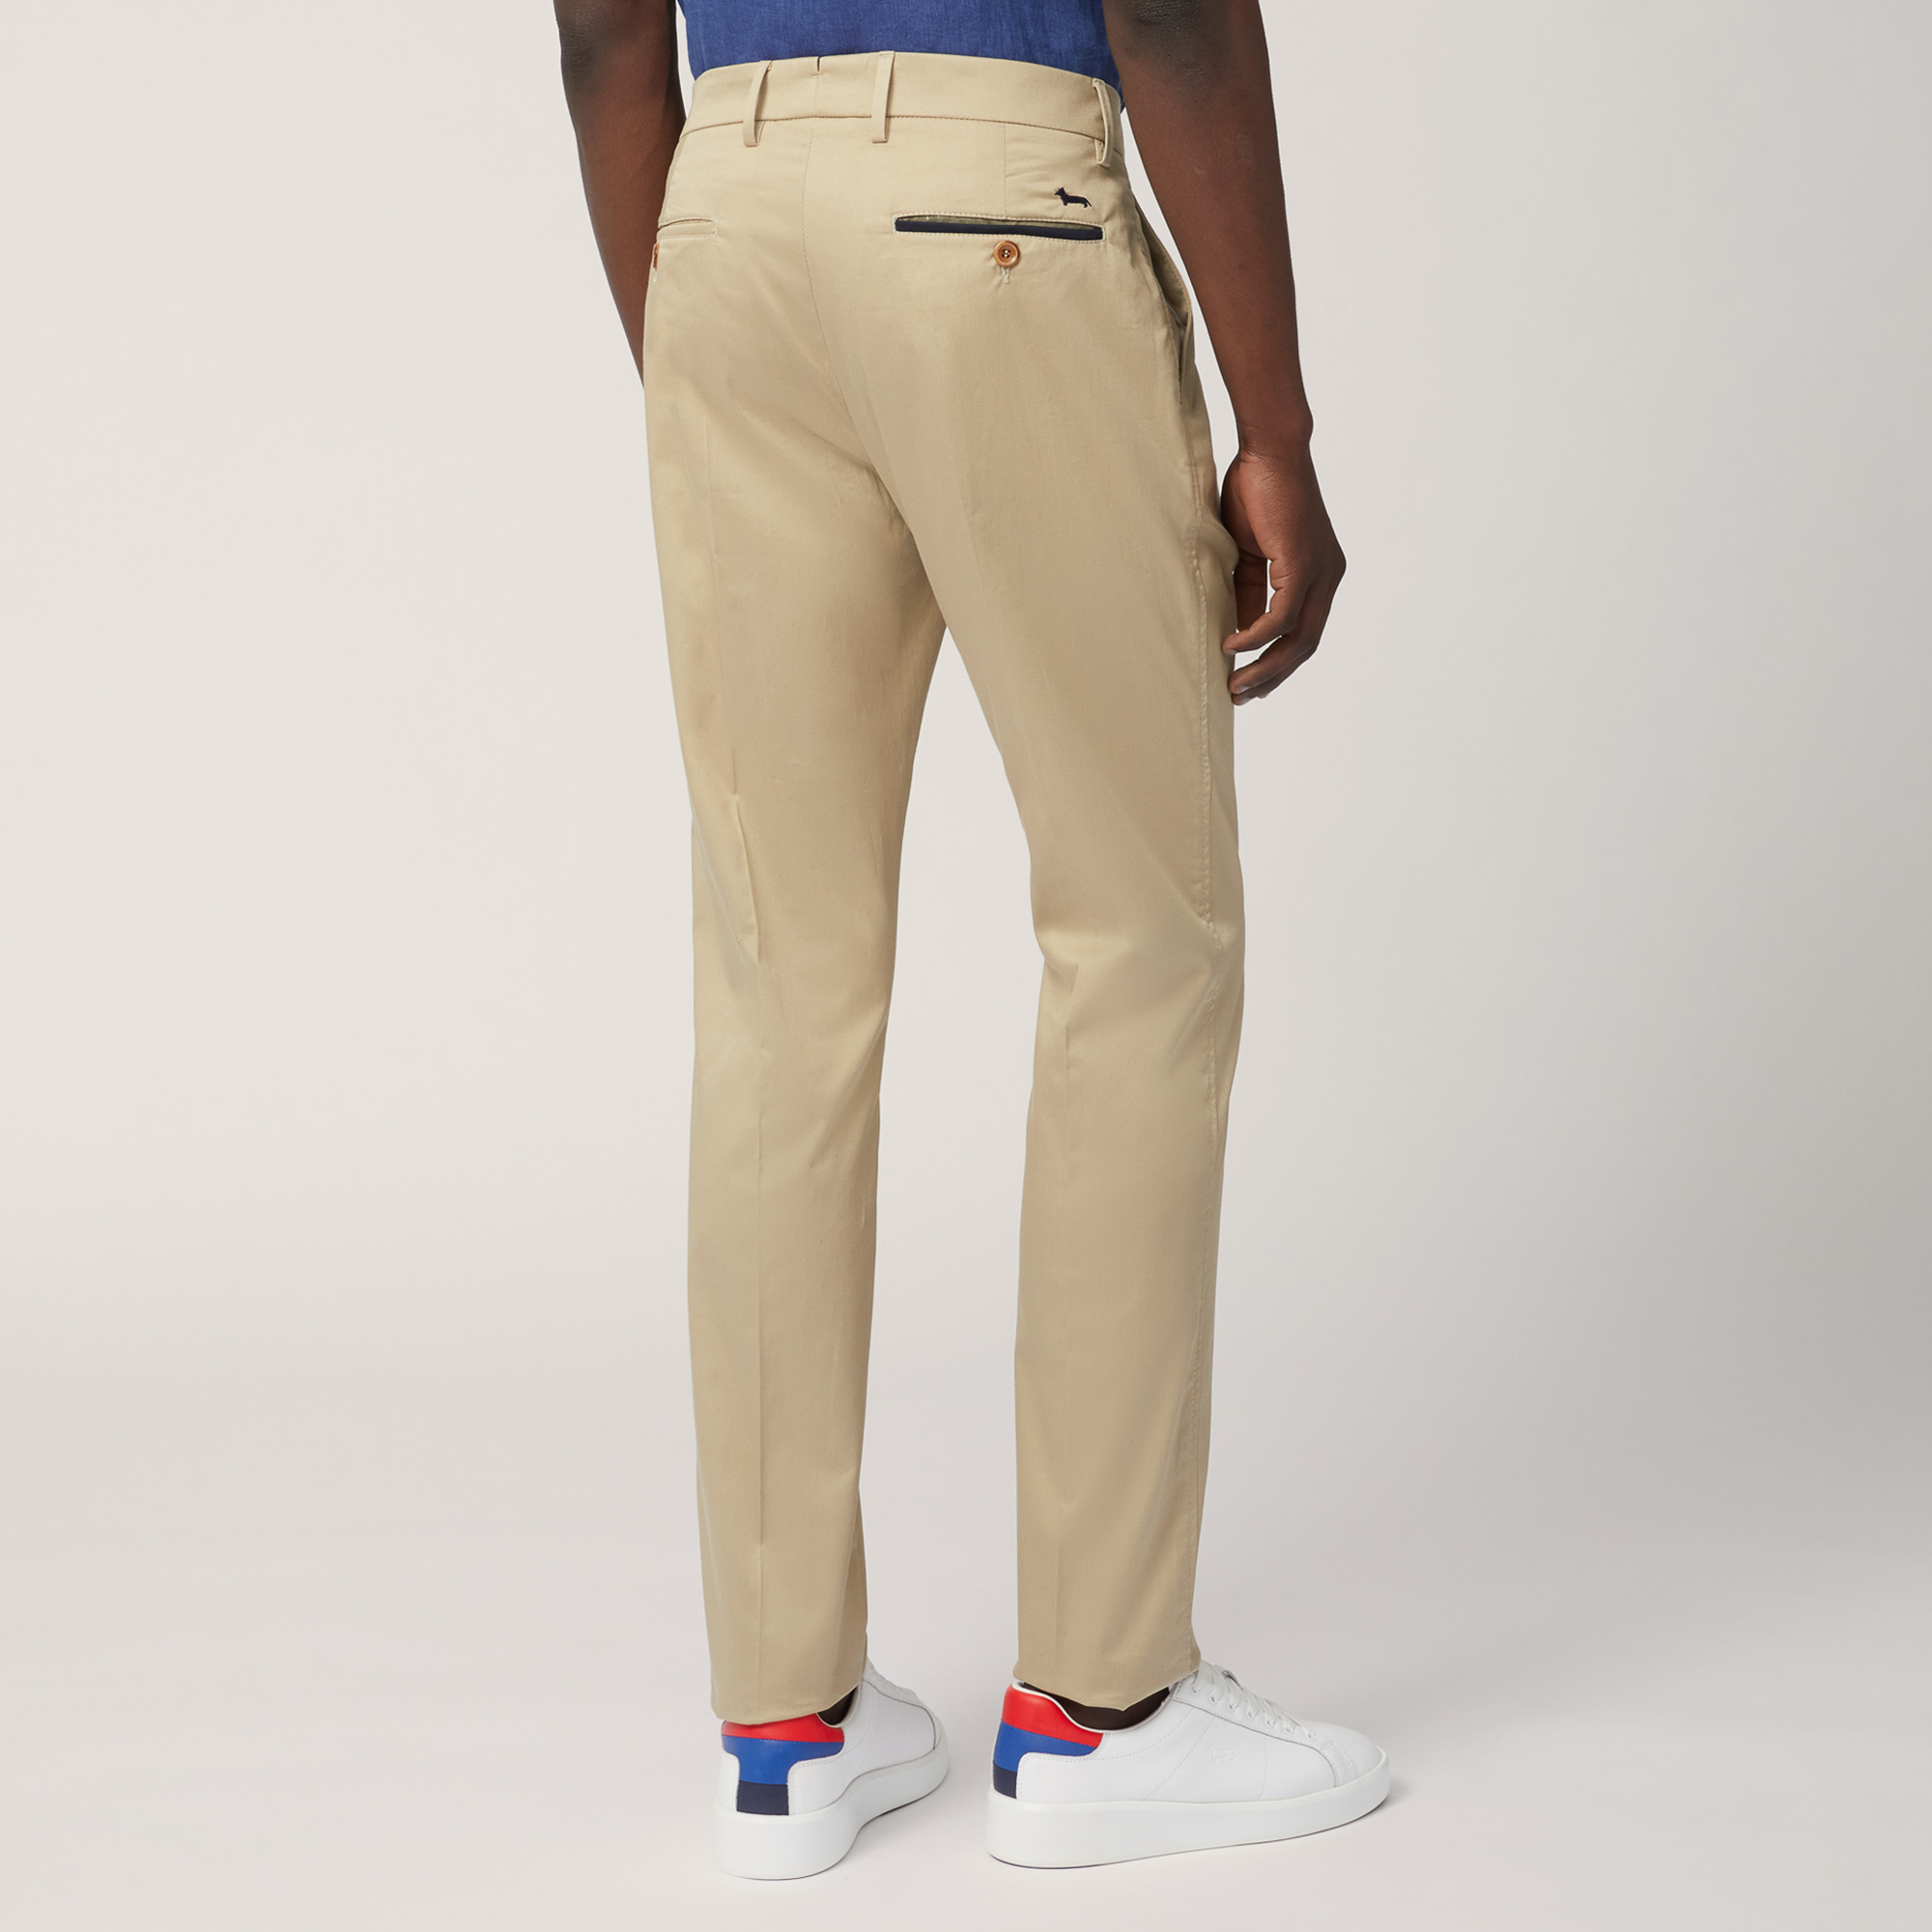 Customized Chino Pants, Beige, large image number 1